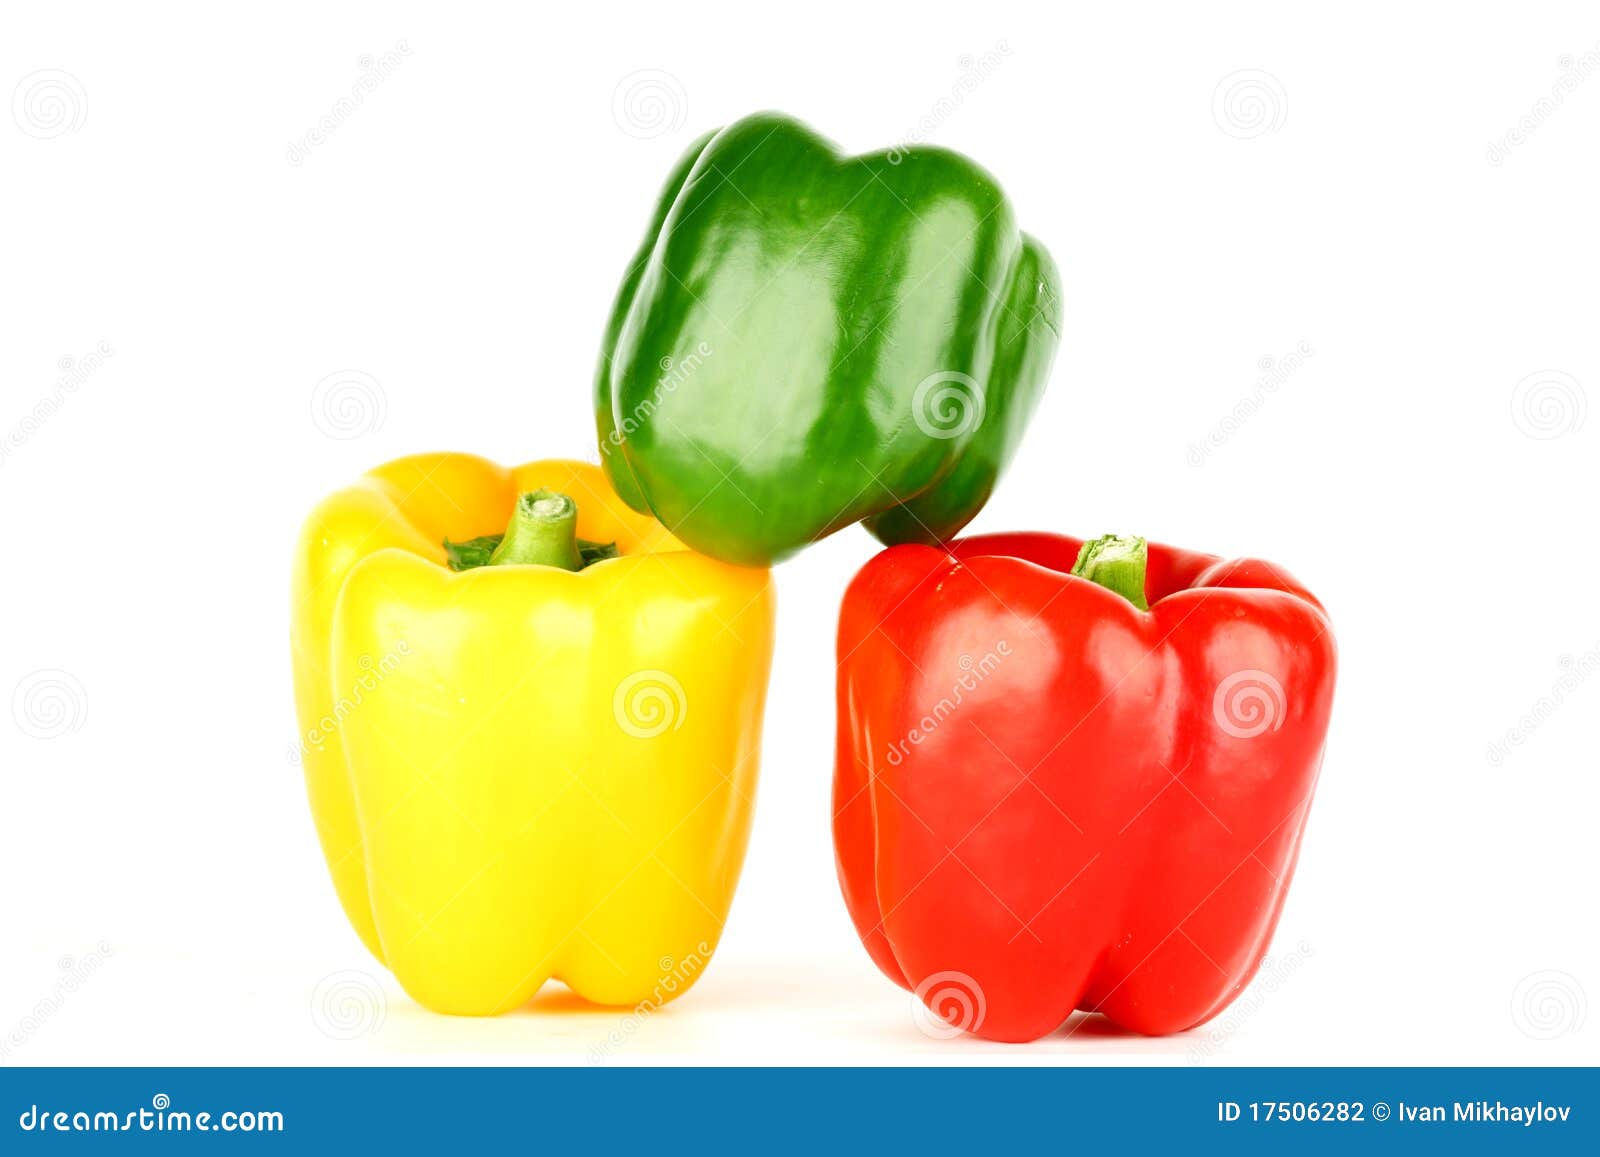 colored paprica